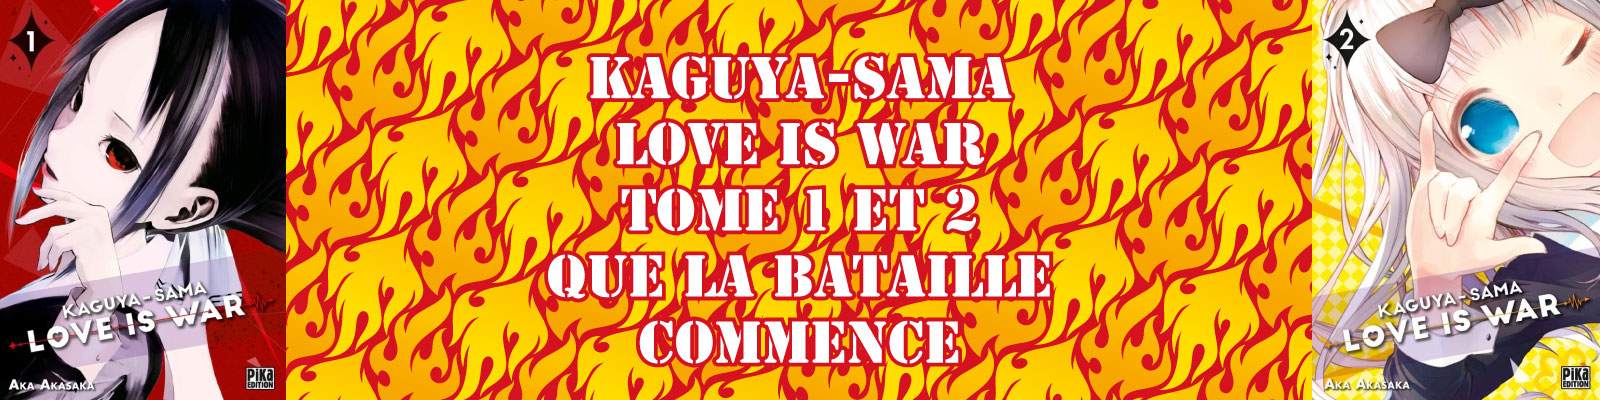 Kaguya Sama Love Is War Tome 1 Et 2 Que La Bataille Commence Esprit Otaku